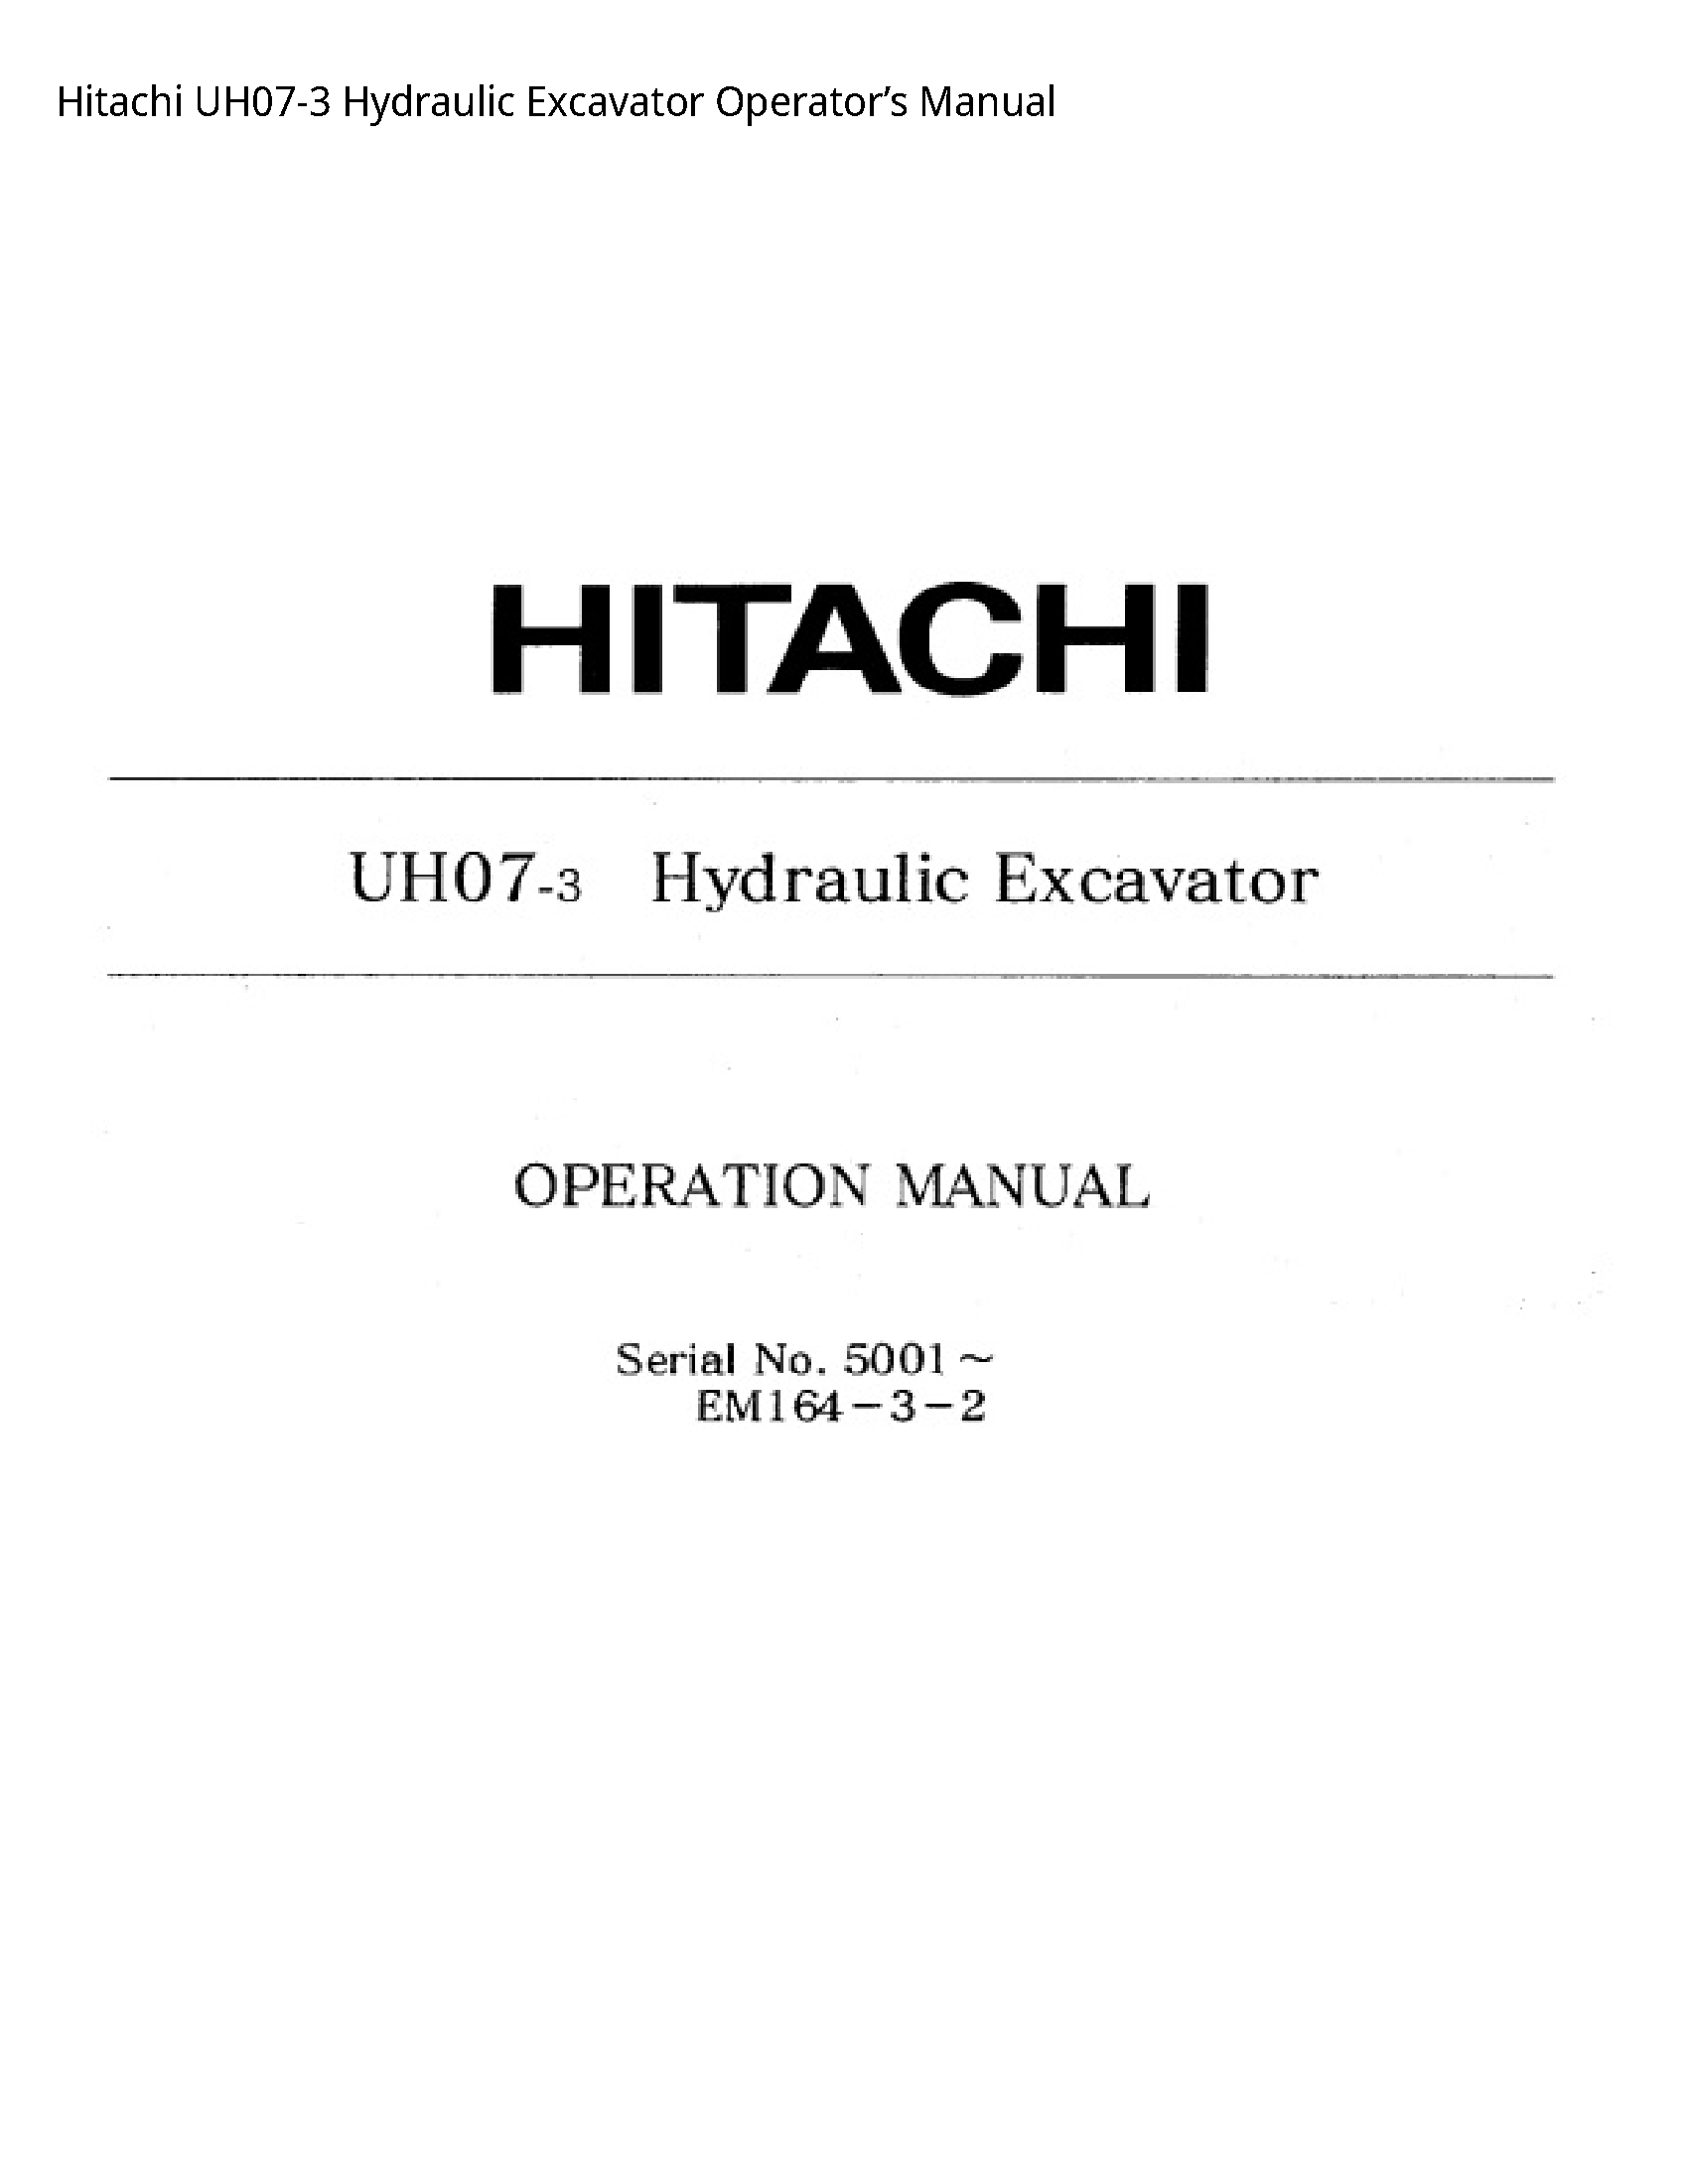 Hitachi UH07-3 Hydraulic Excavator Operator’s manual